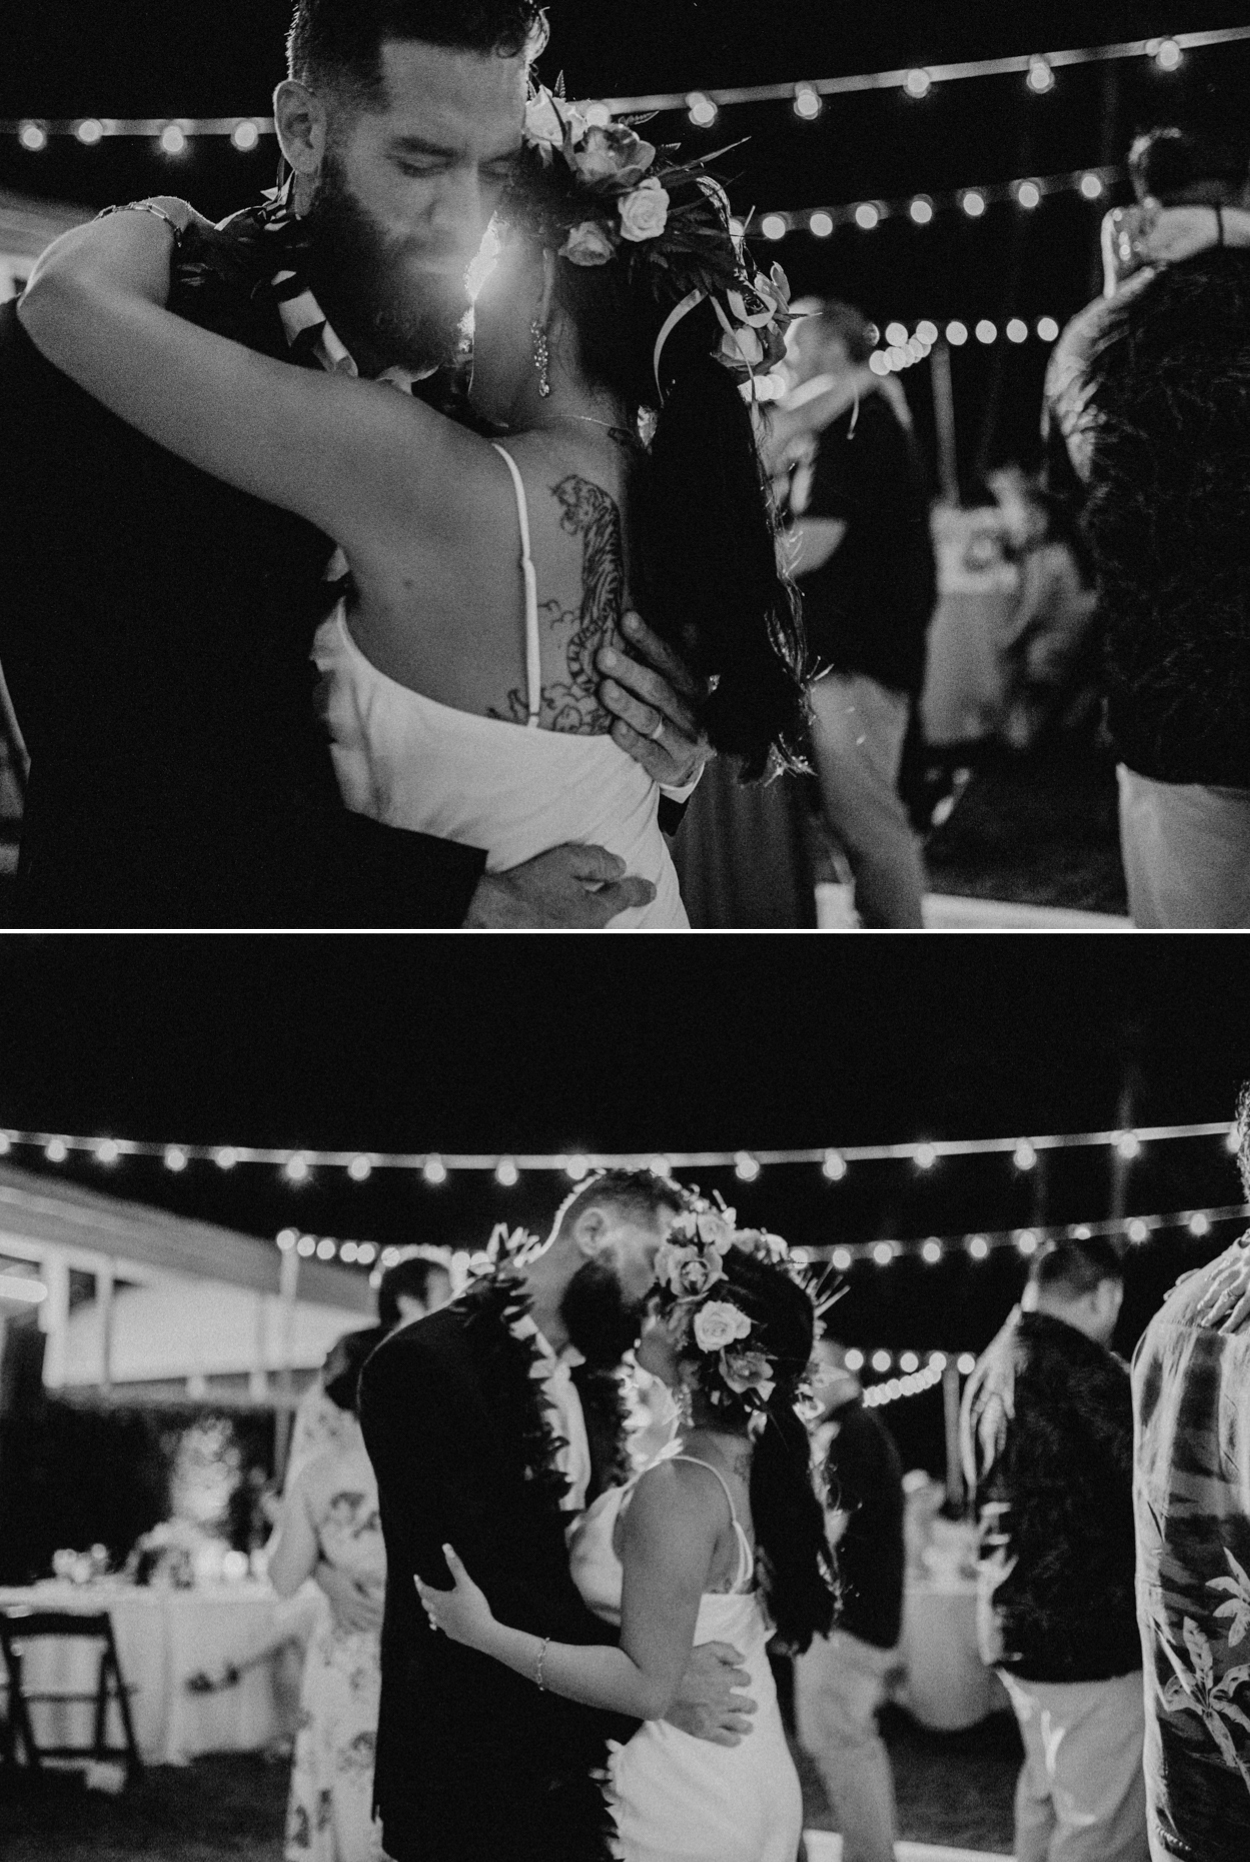 Moli'i fishpond Hawaii bride and groom romantic dance and kiss. Black and white.